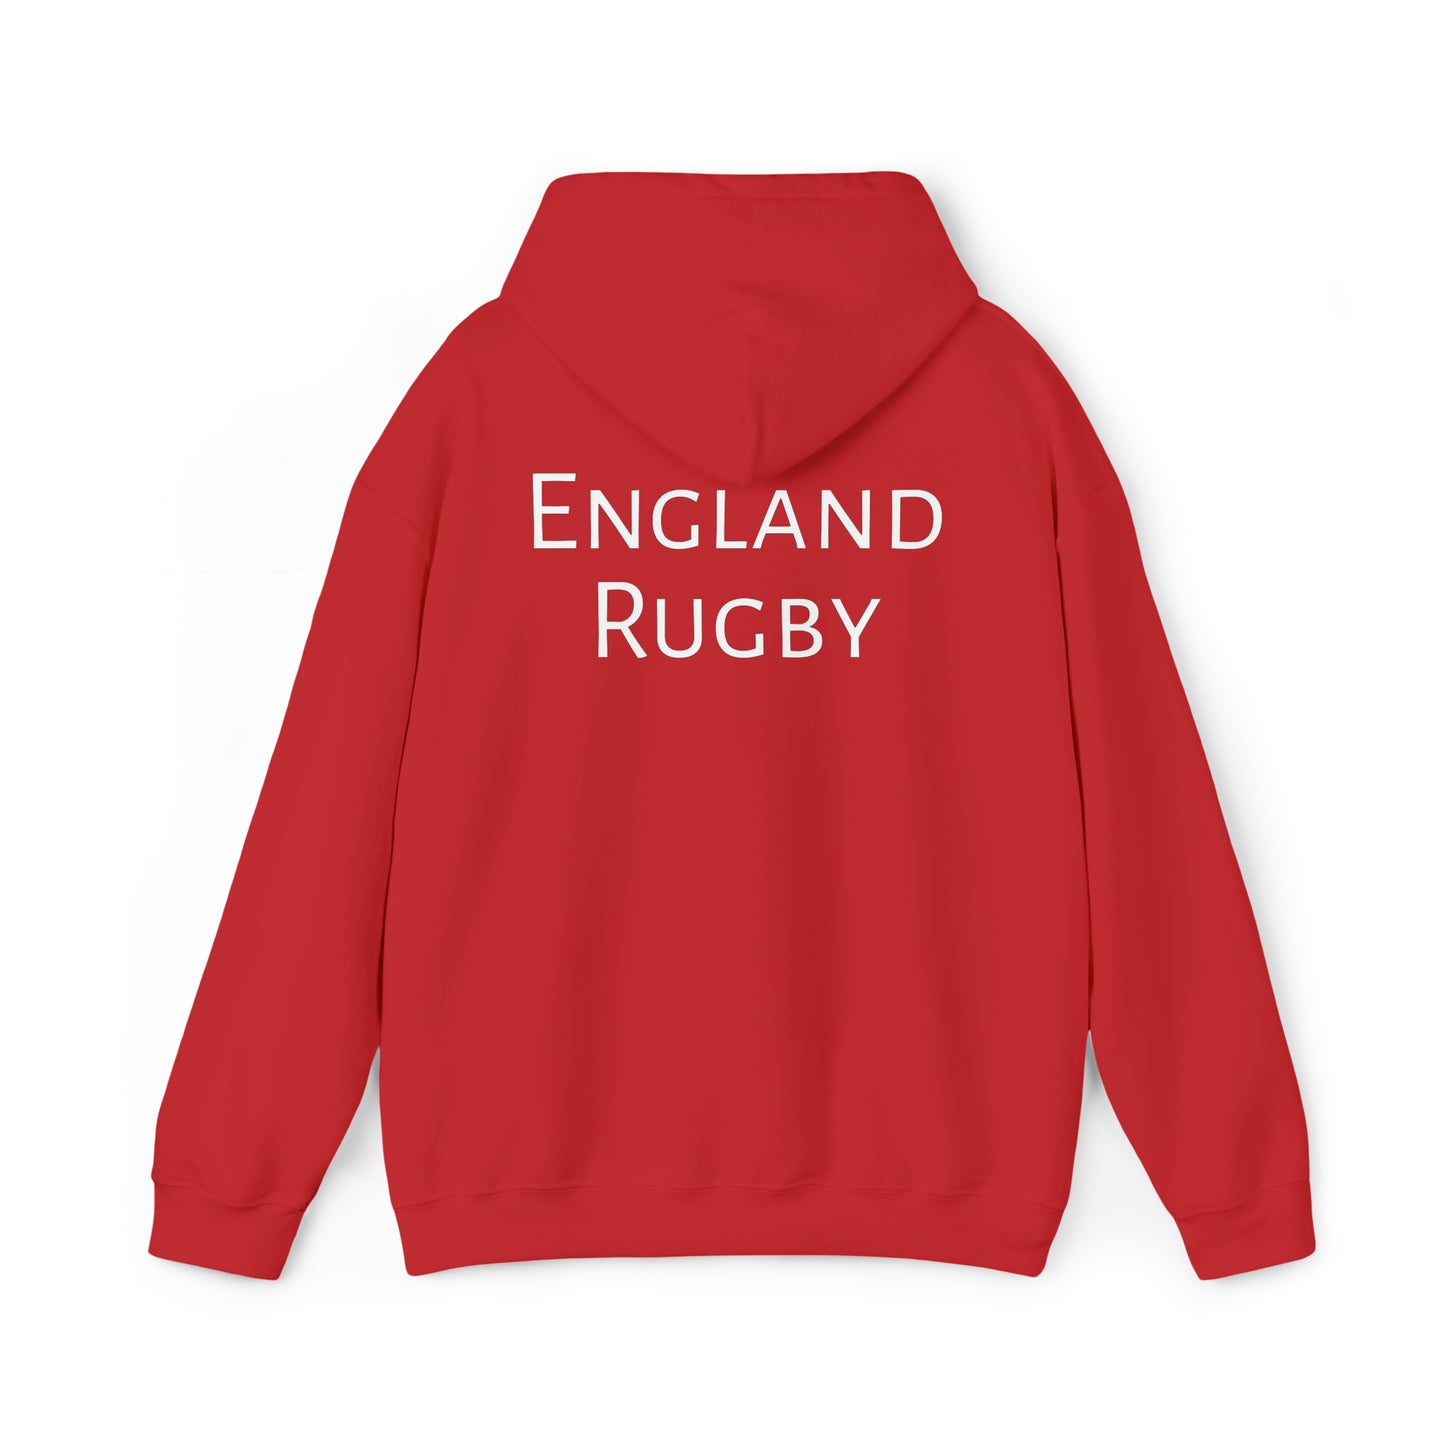 Post Match England - dark hoodies